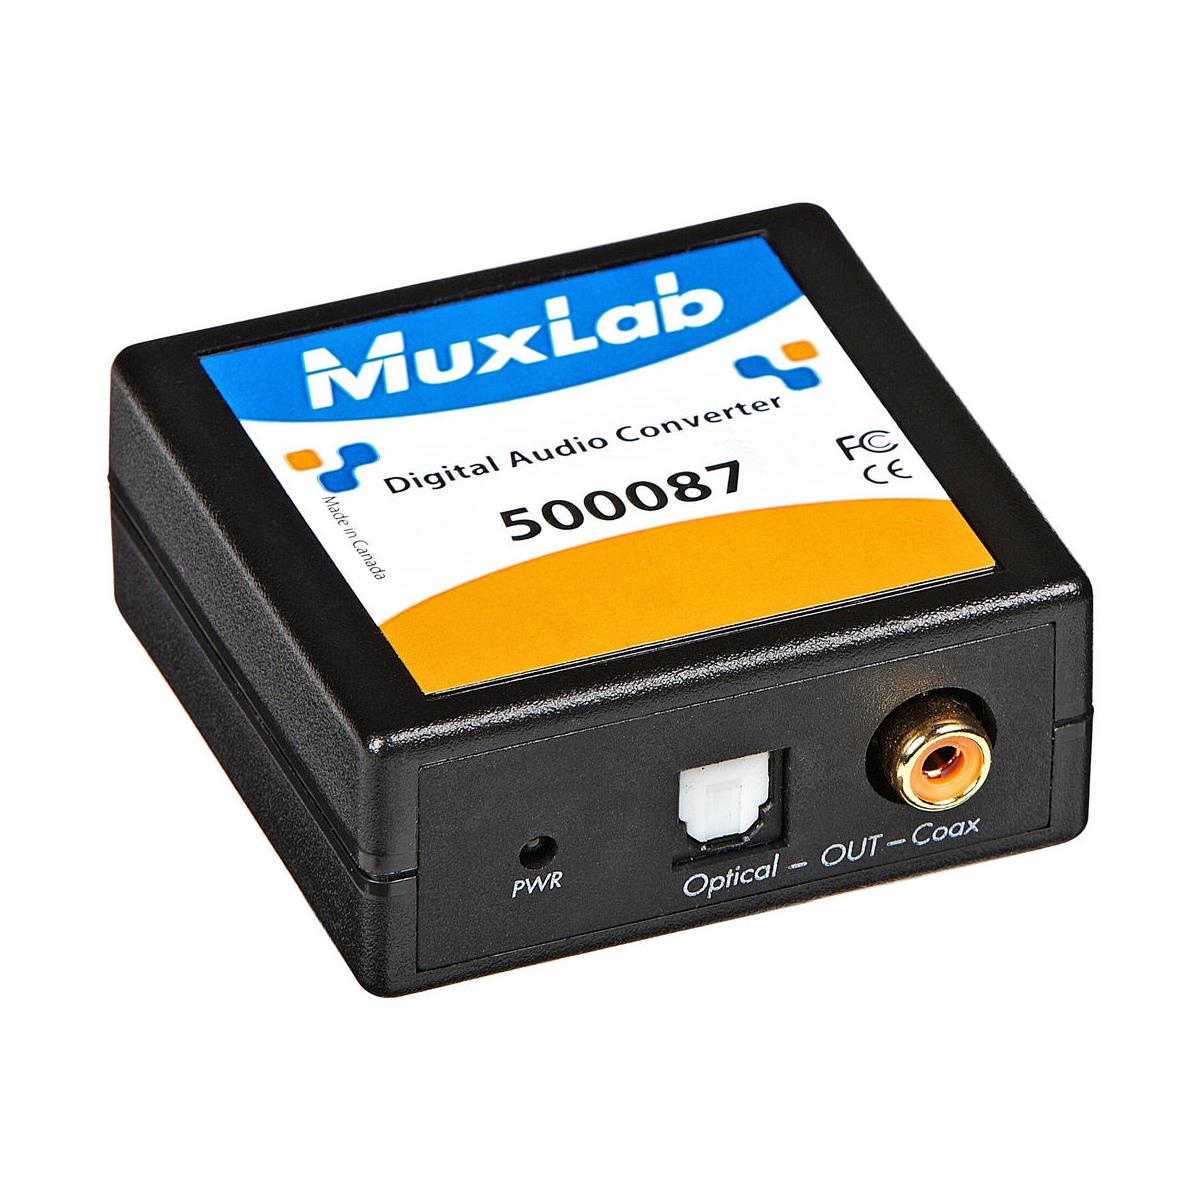 Image of Muxlab Digital Audio Converter